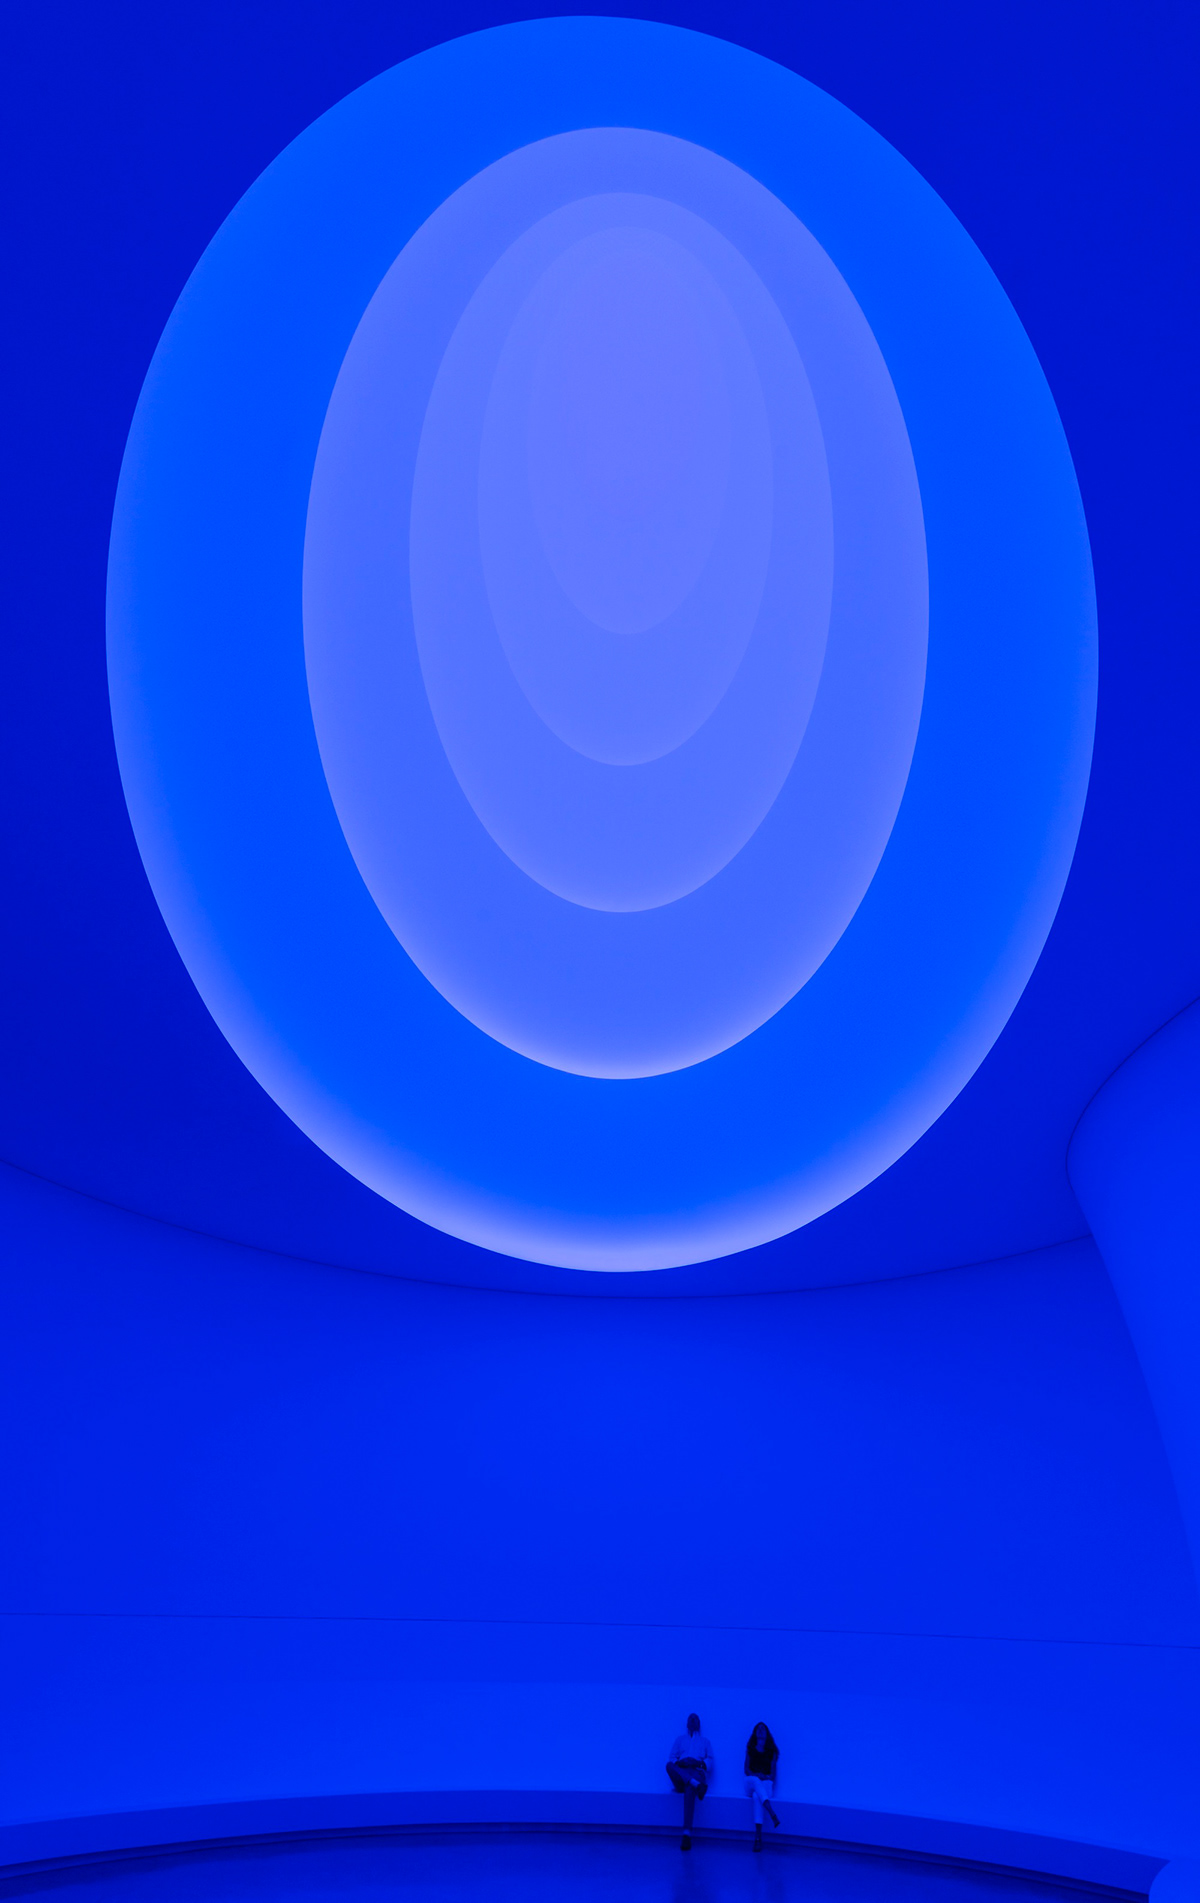 turrell guggenheim Rotunda rendering visualization aten reign james installation